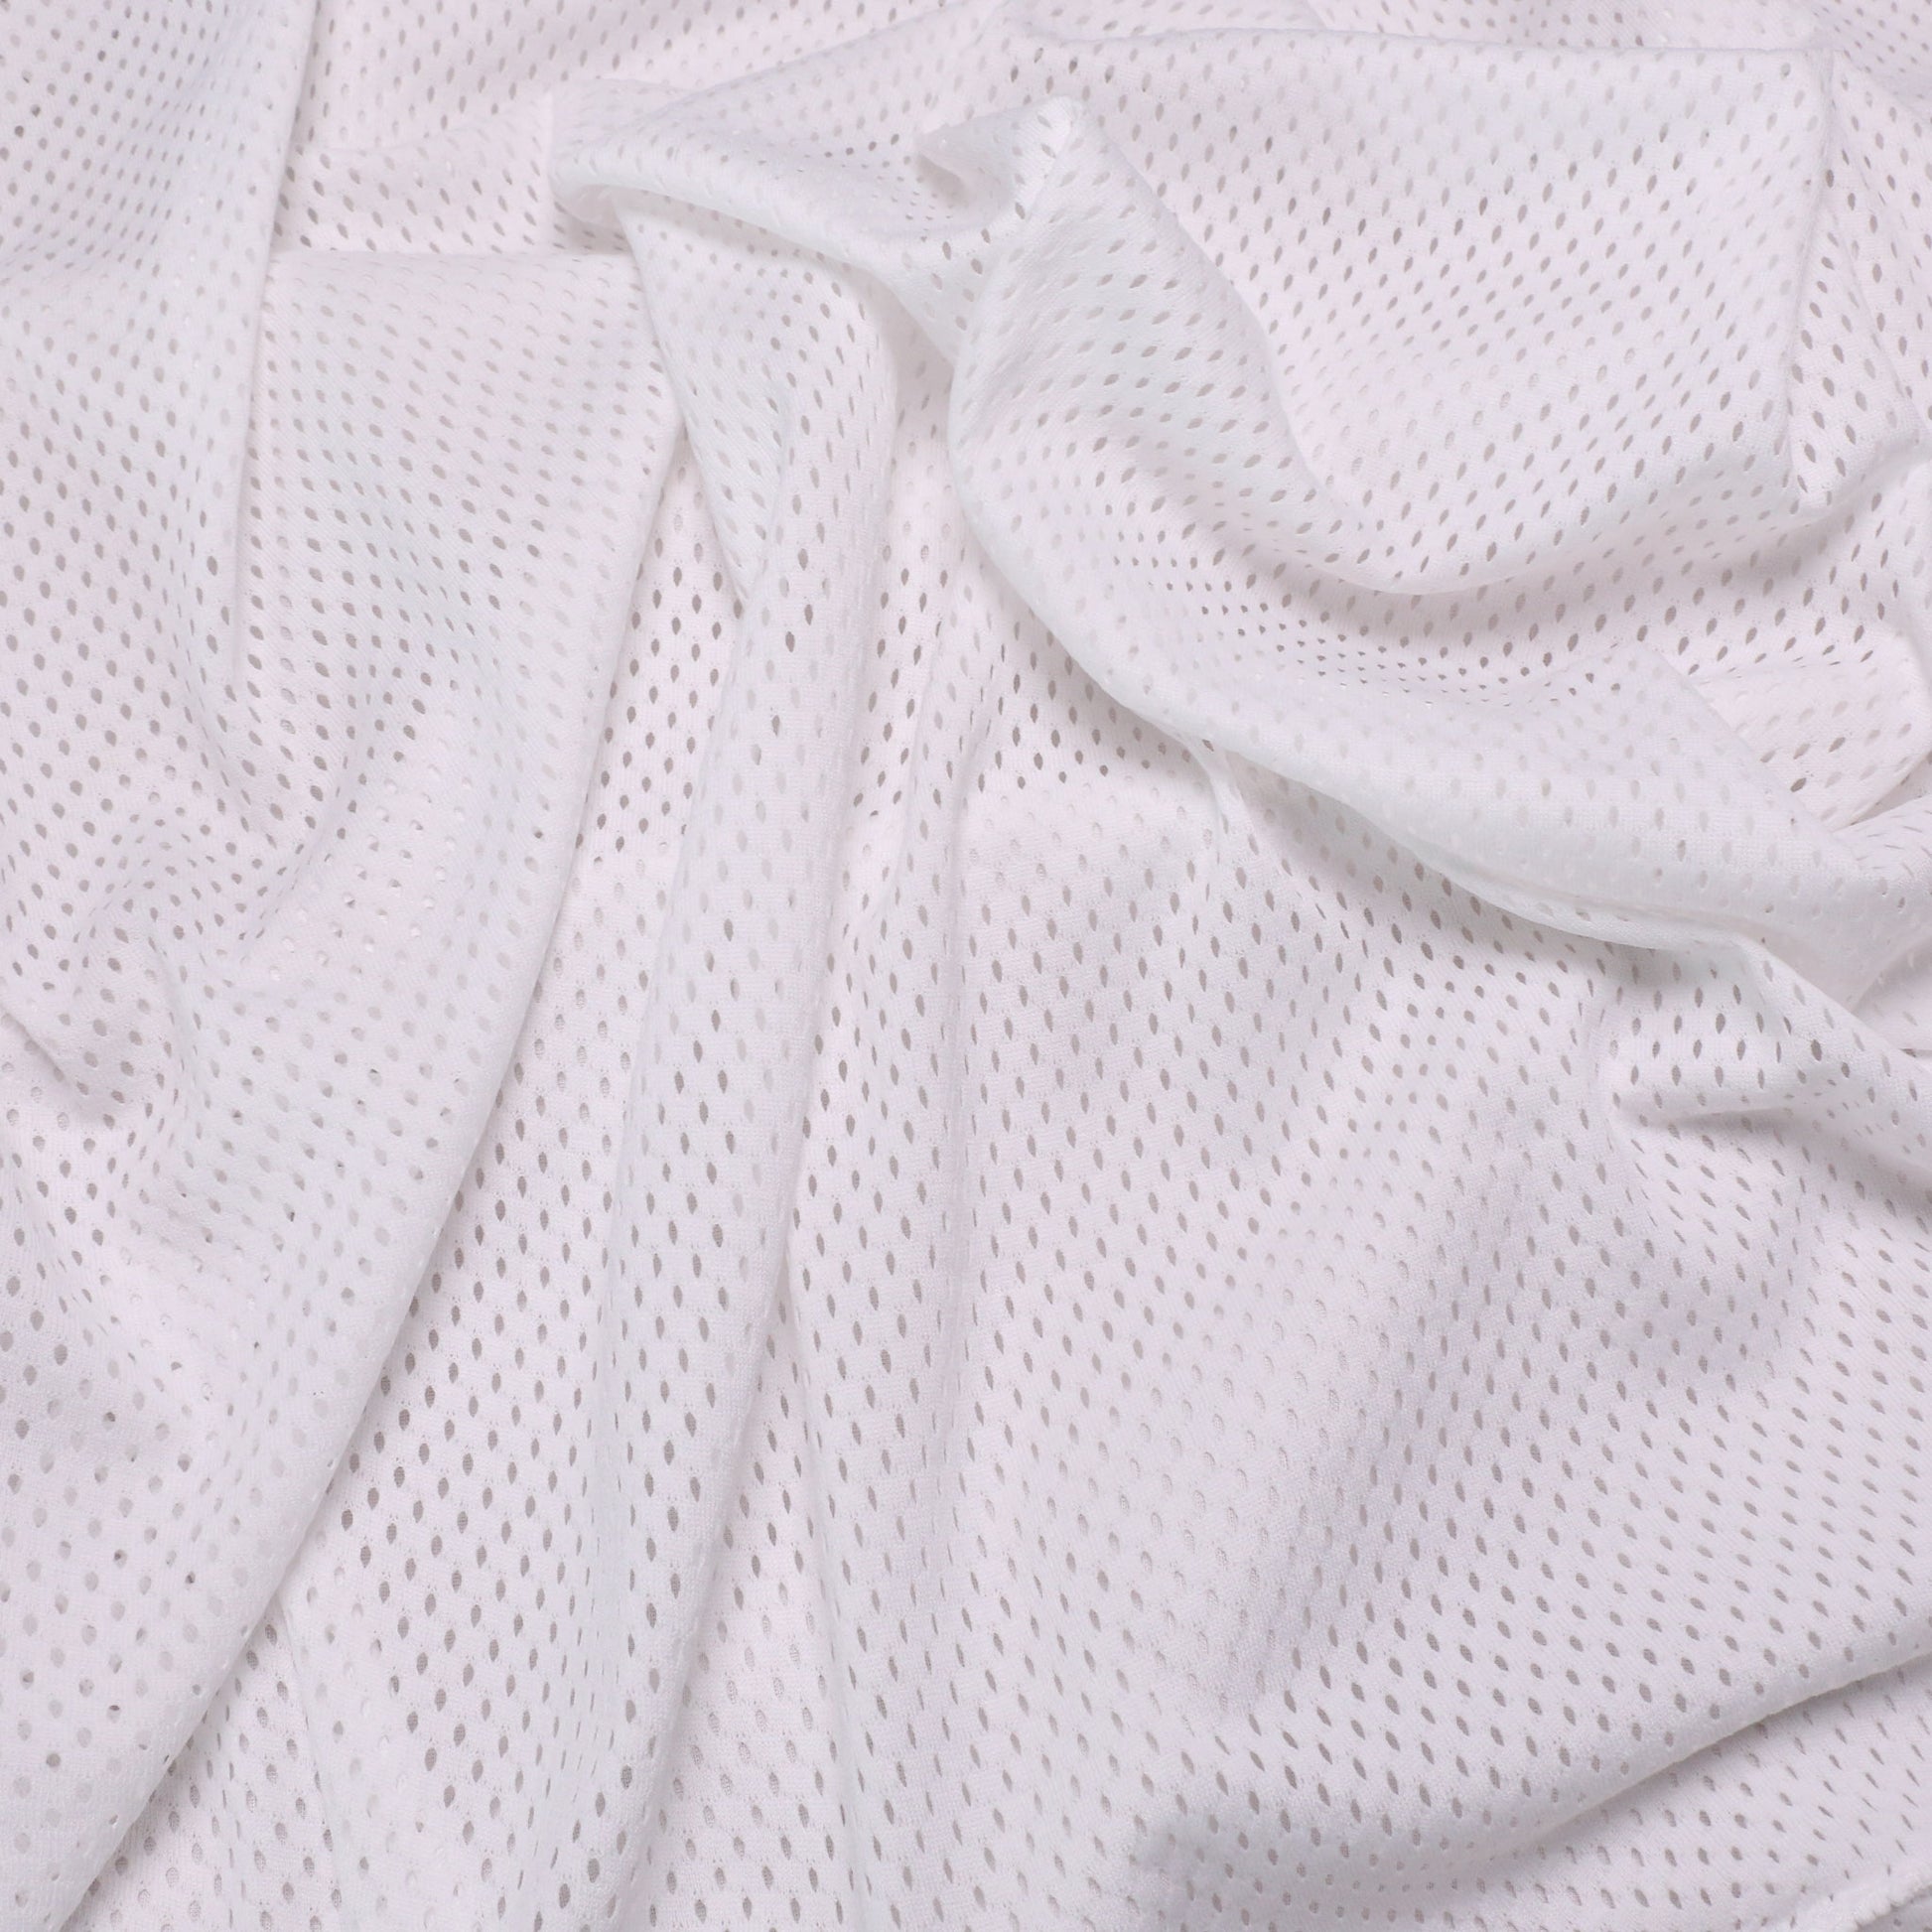 airtesh mesh sportswear fabric for sale in white